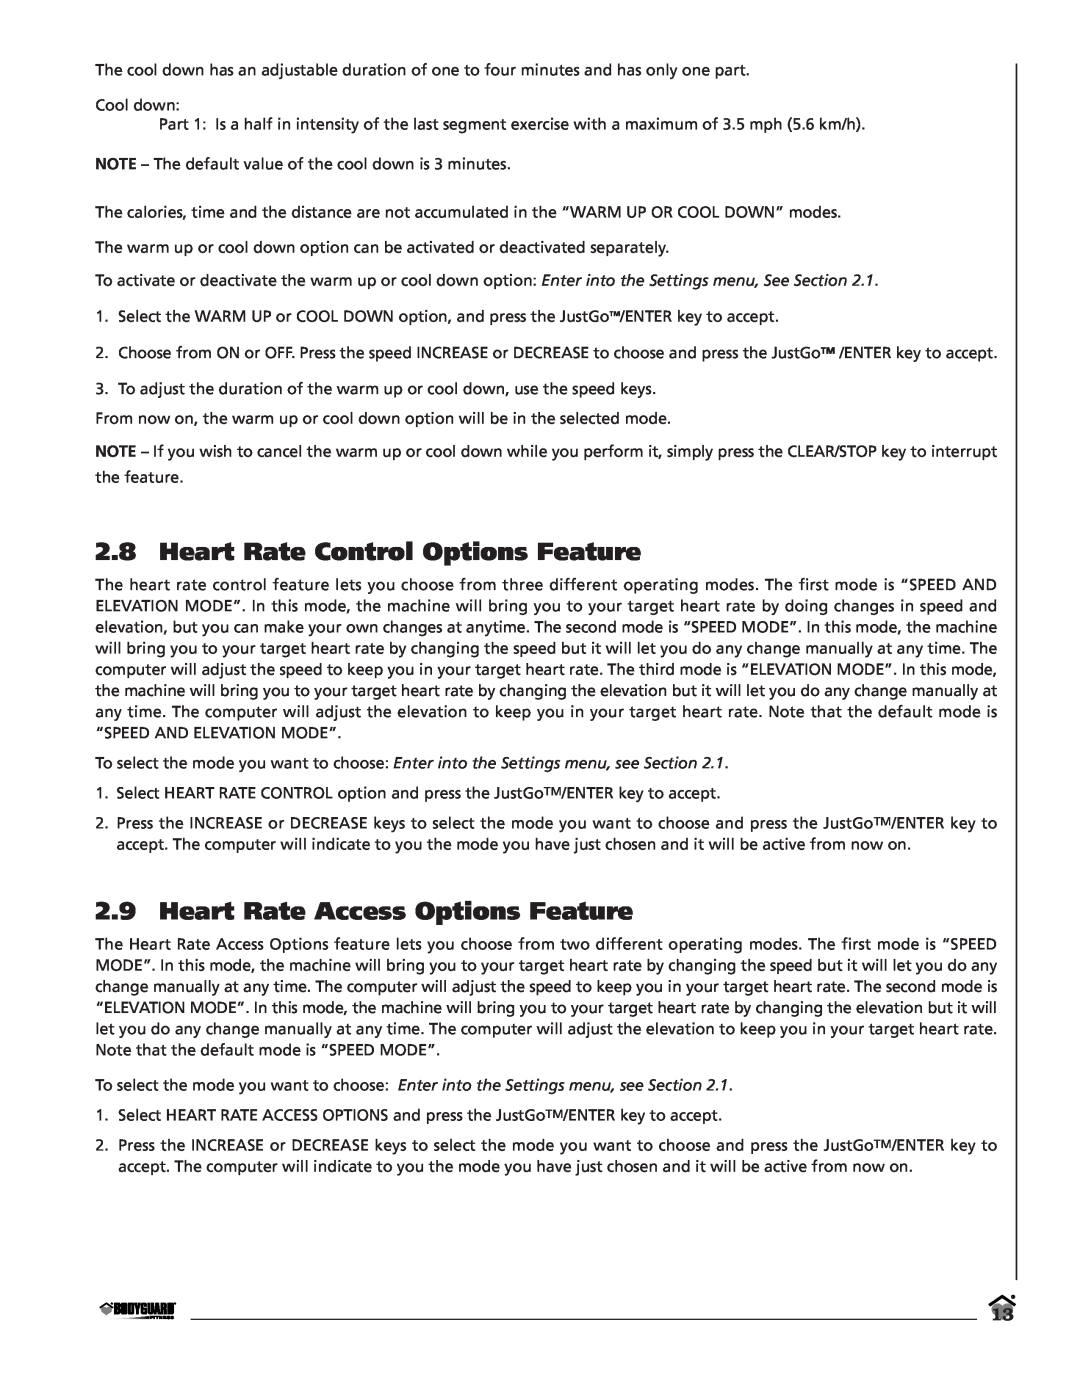 Bodyguard T280C, T320, LT280P manual Heart Rate Control Options Feature, Heart Rate Access Options Feature 